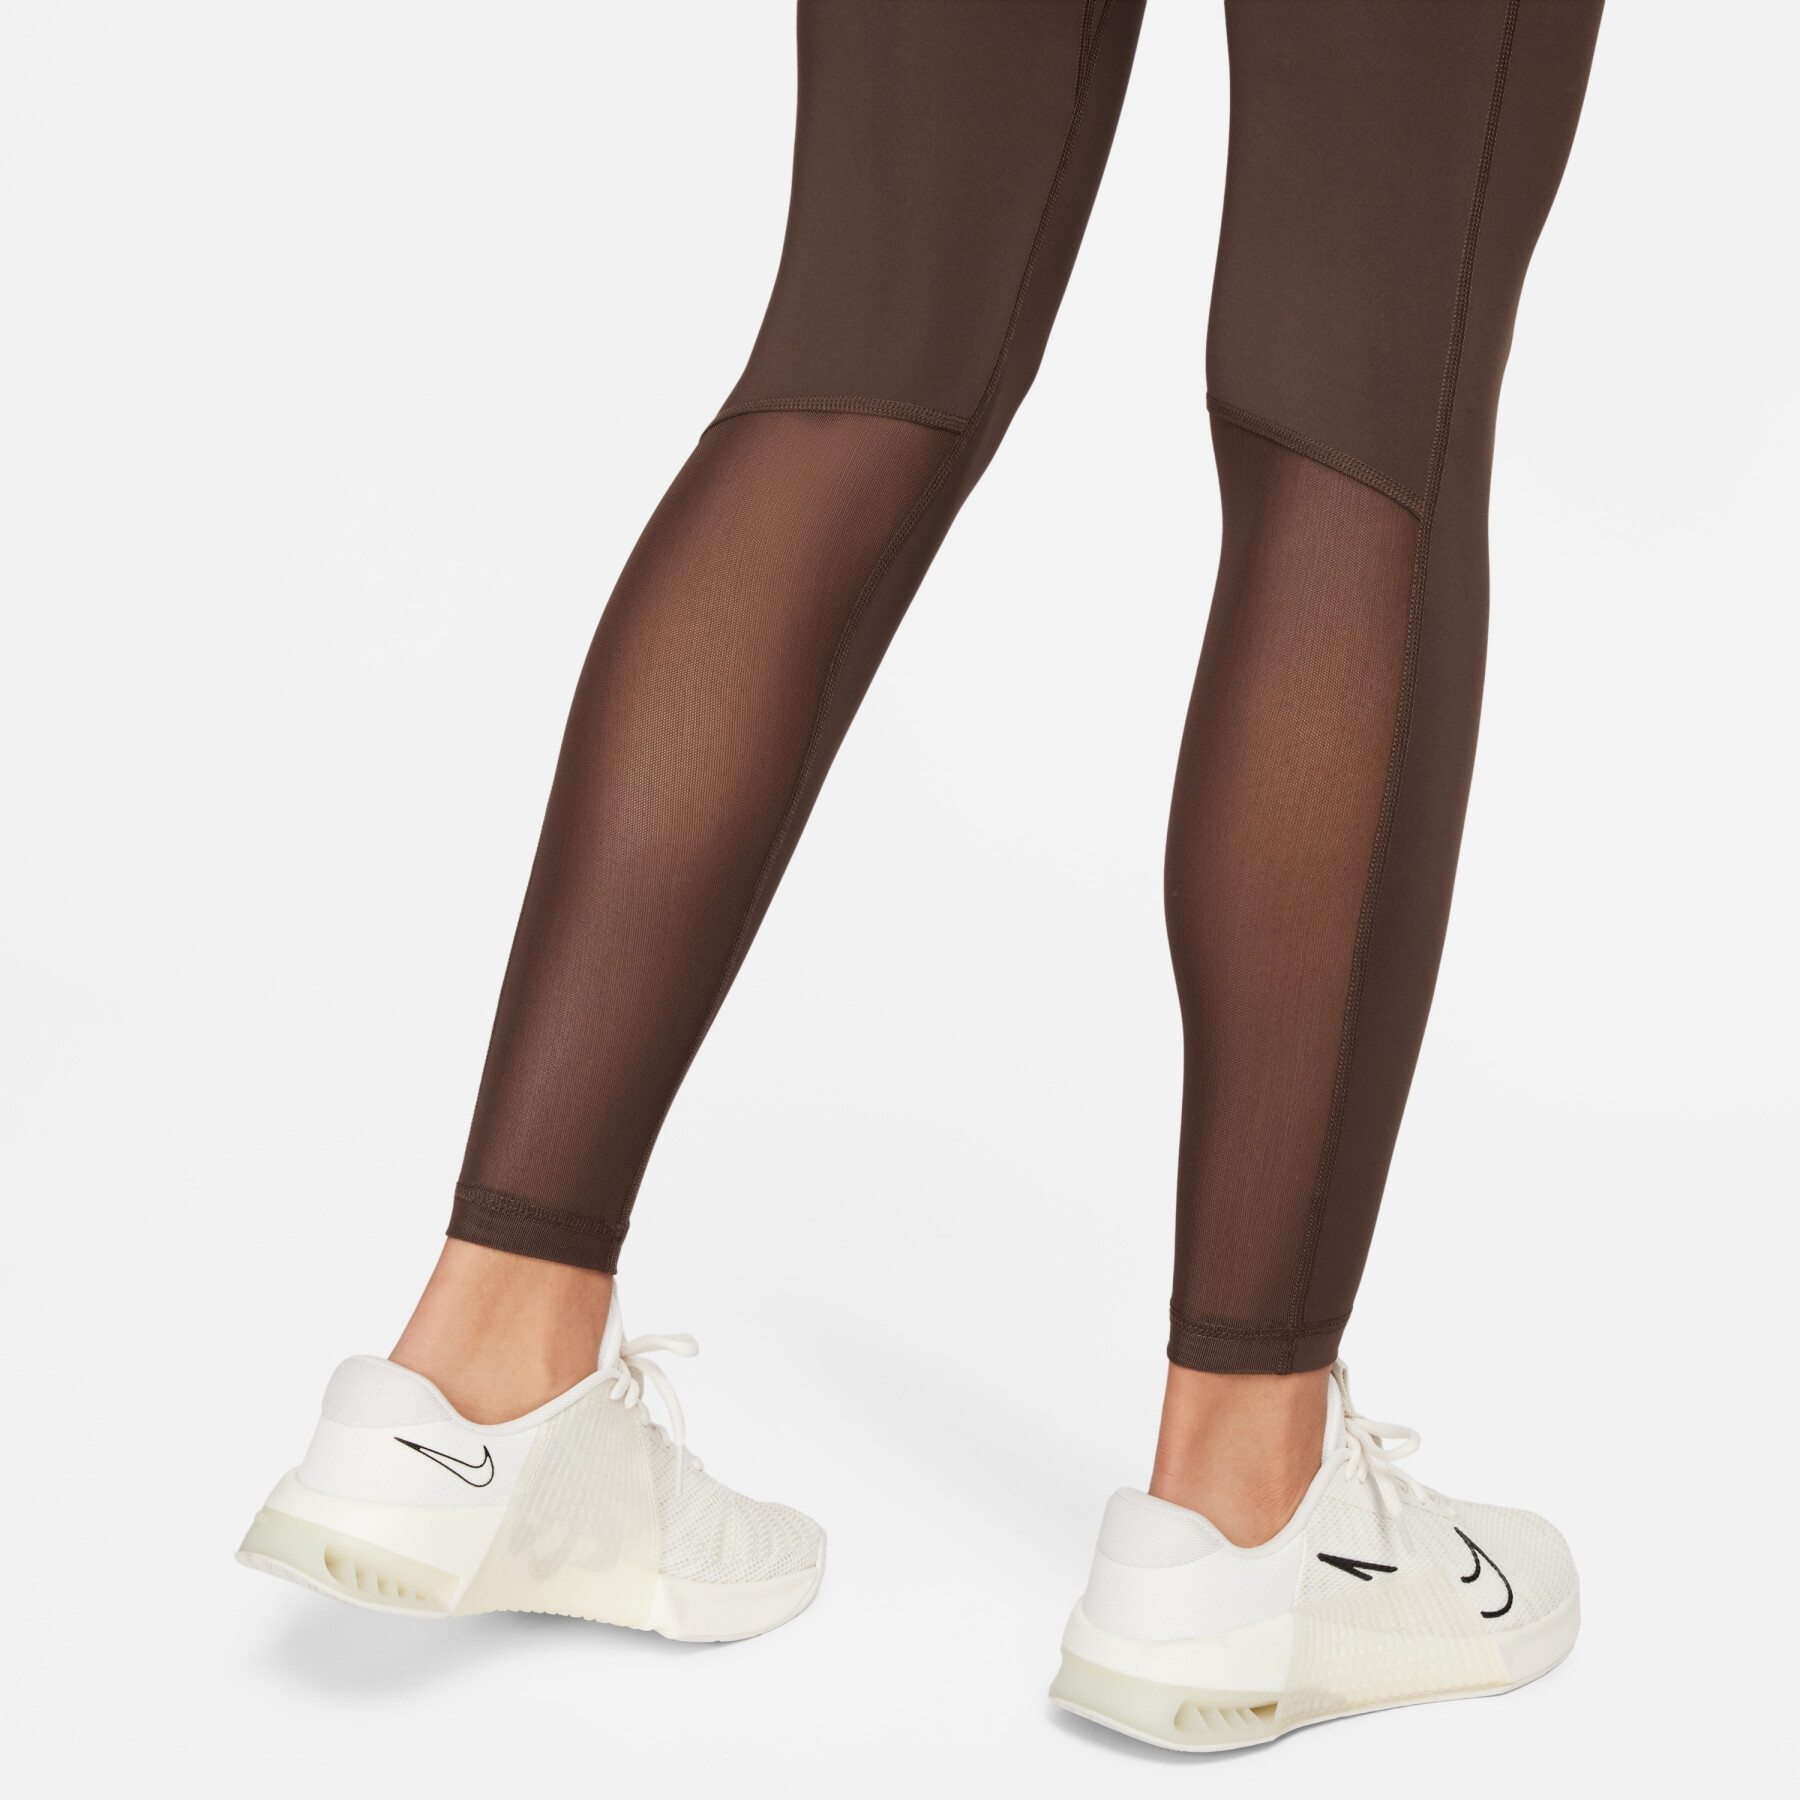 Leggings Frau Nike Pro 365